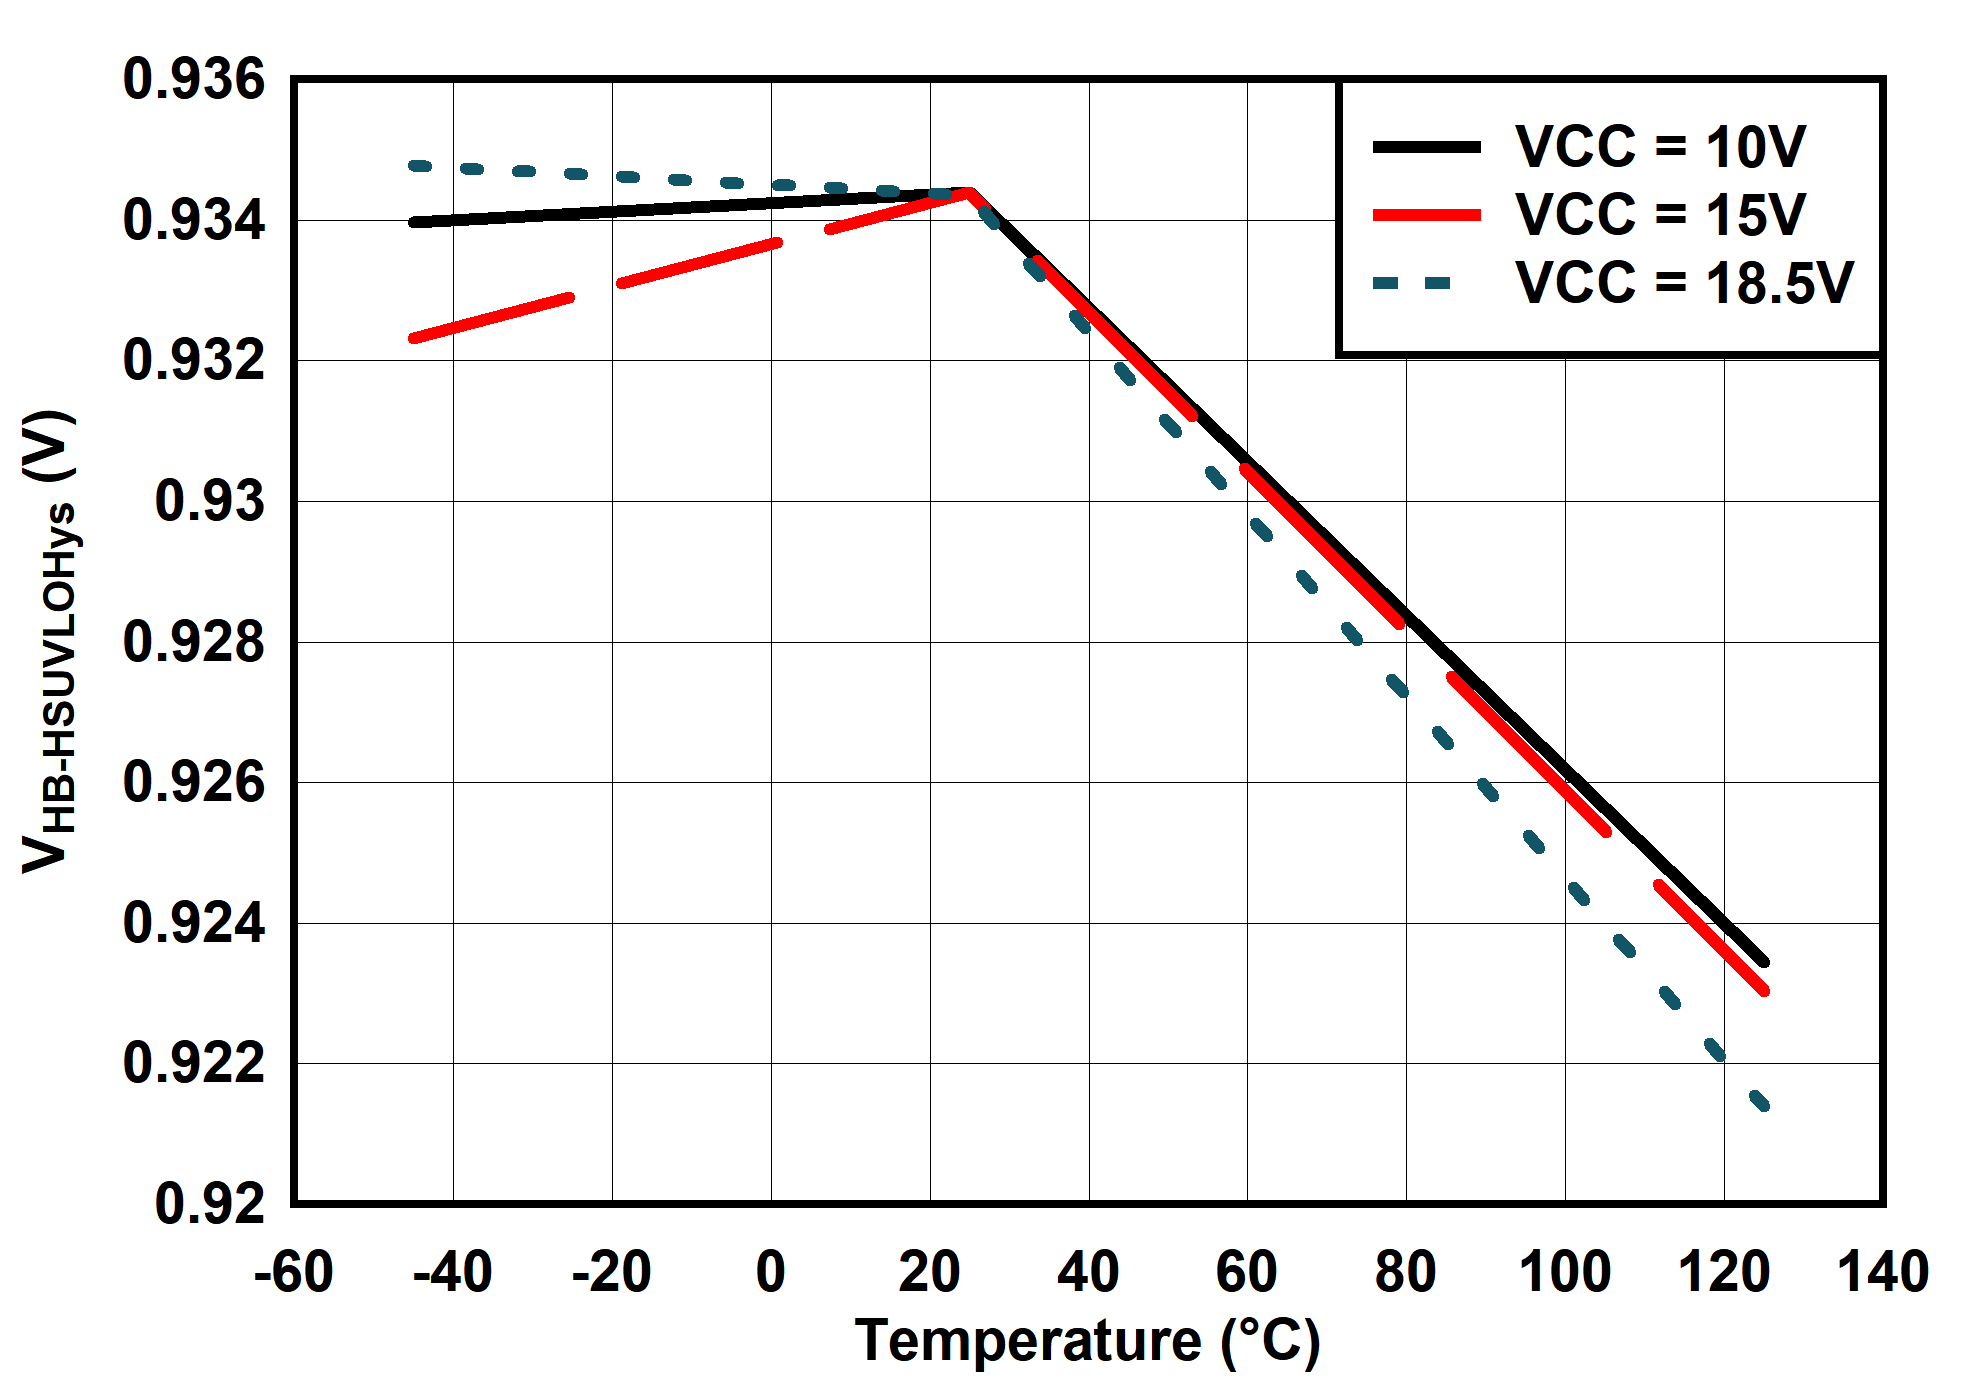 UCC25660 IHB-HSUVLOHys vs Temperature